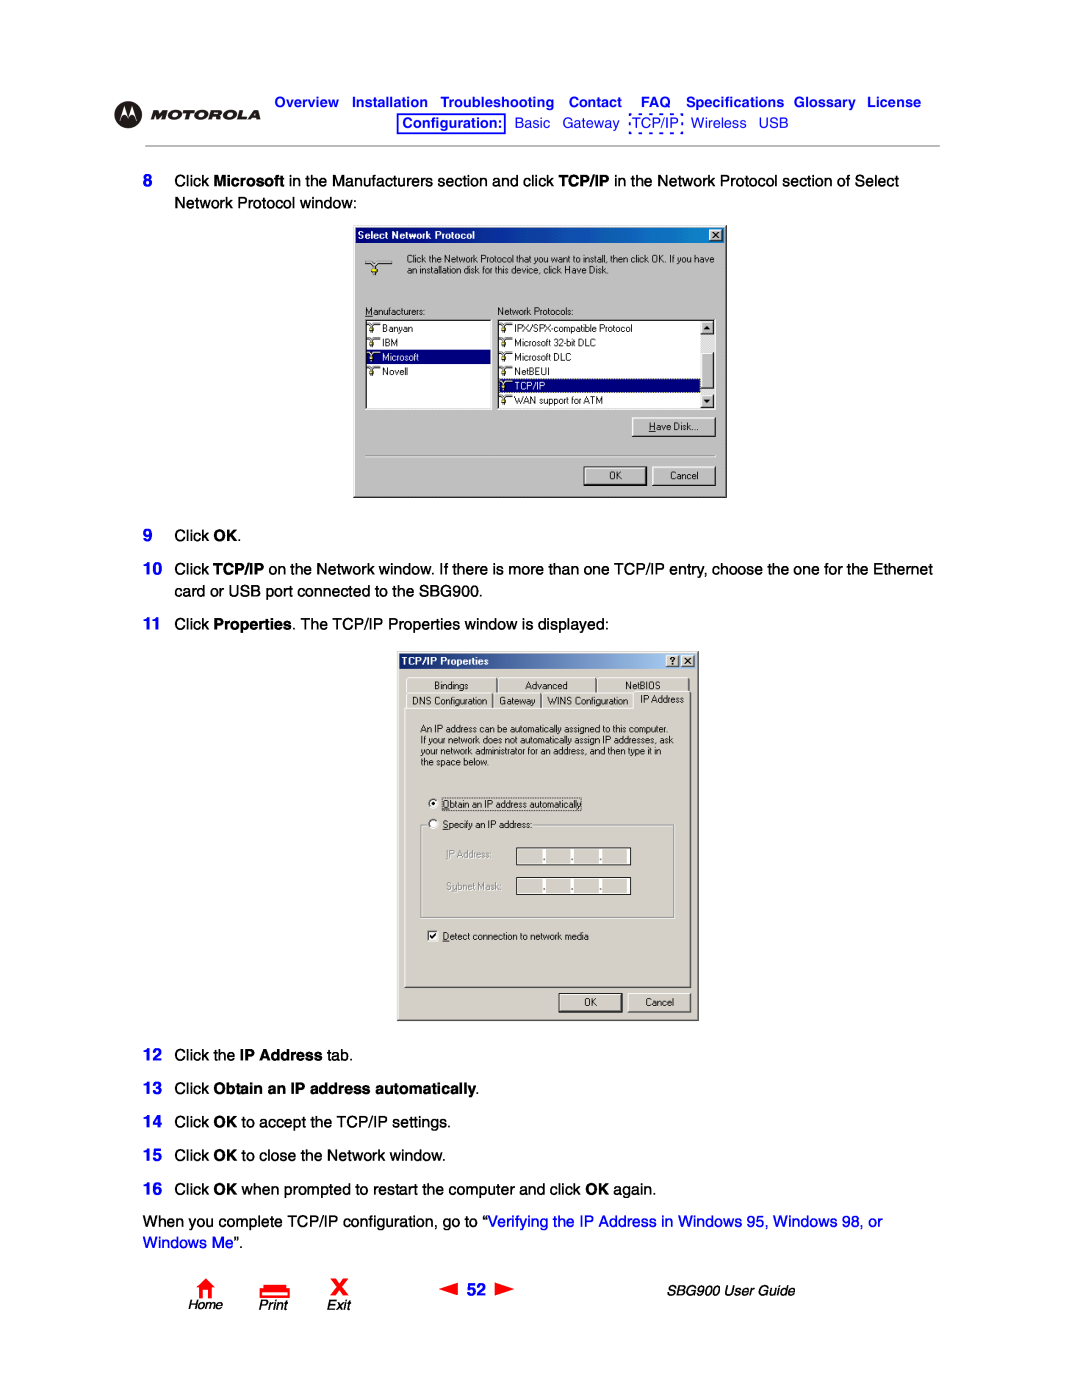 Motorola SBG900 manual Click Obtain an IP address automatically 